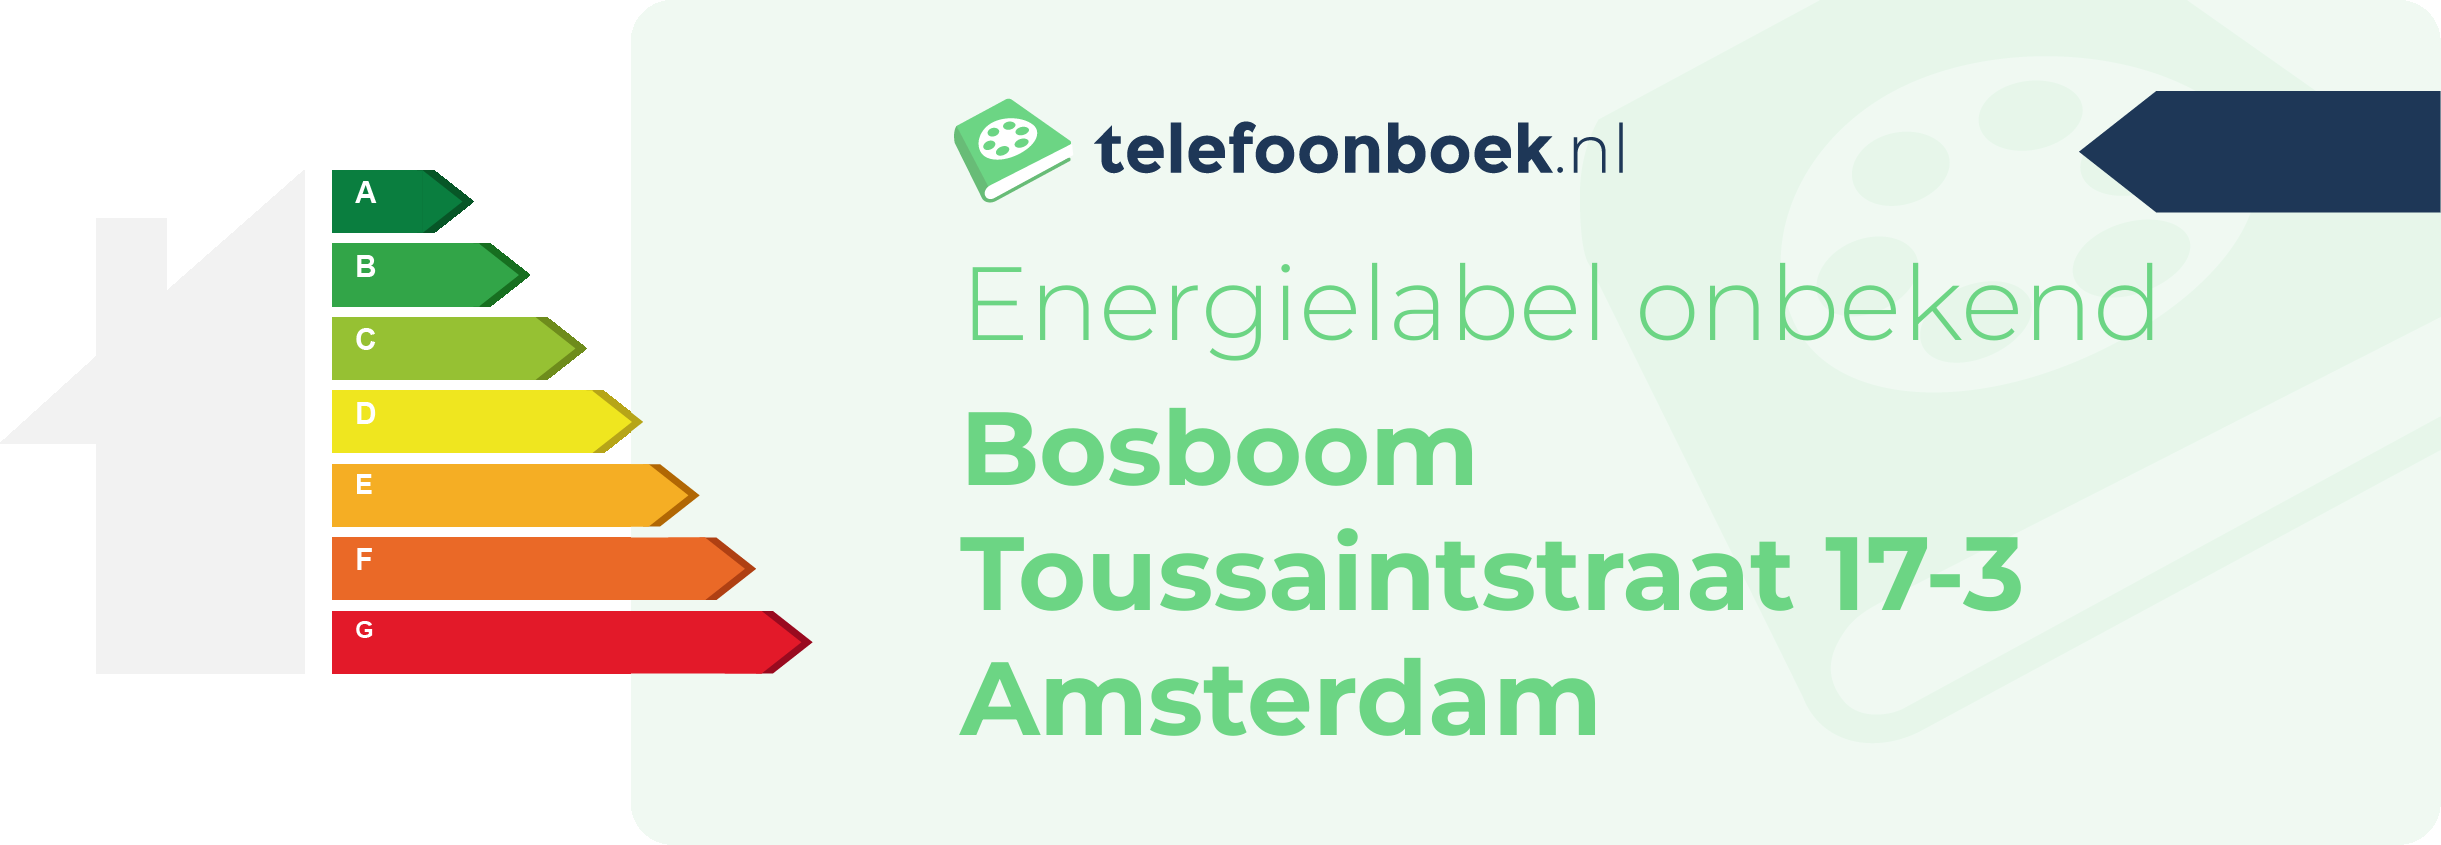 Energielabel Bosboom Toussaintstraat 17-3 Amsterdam